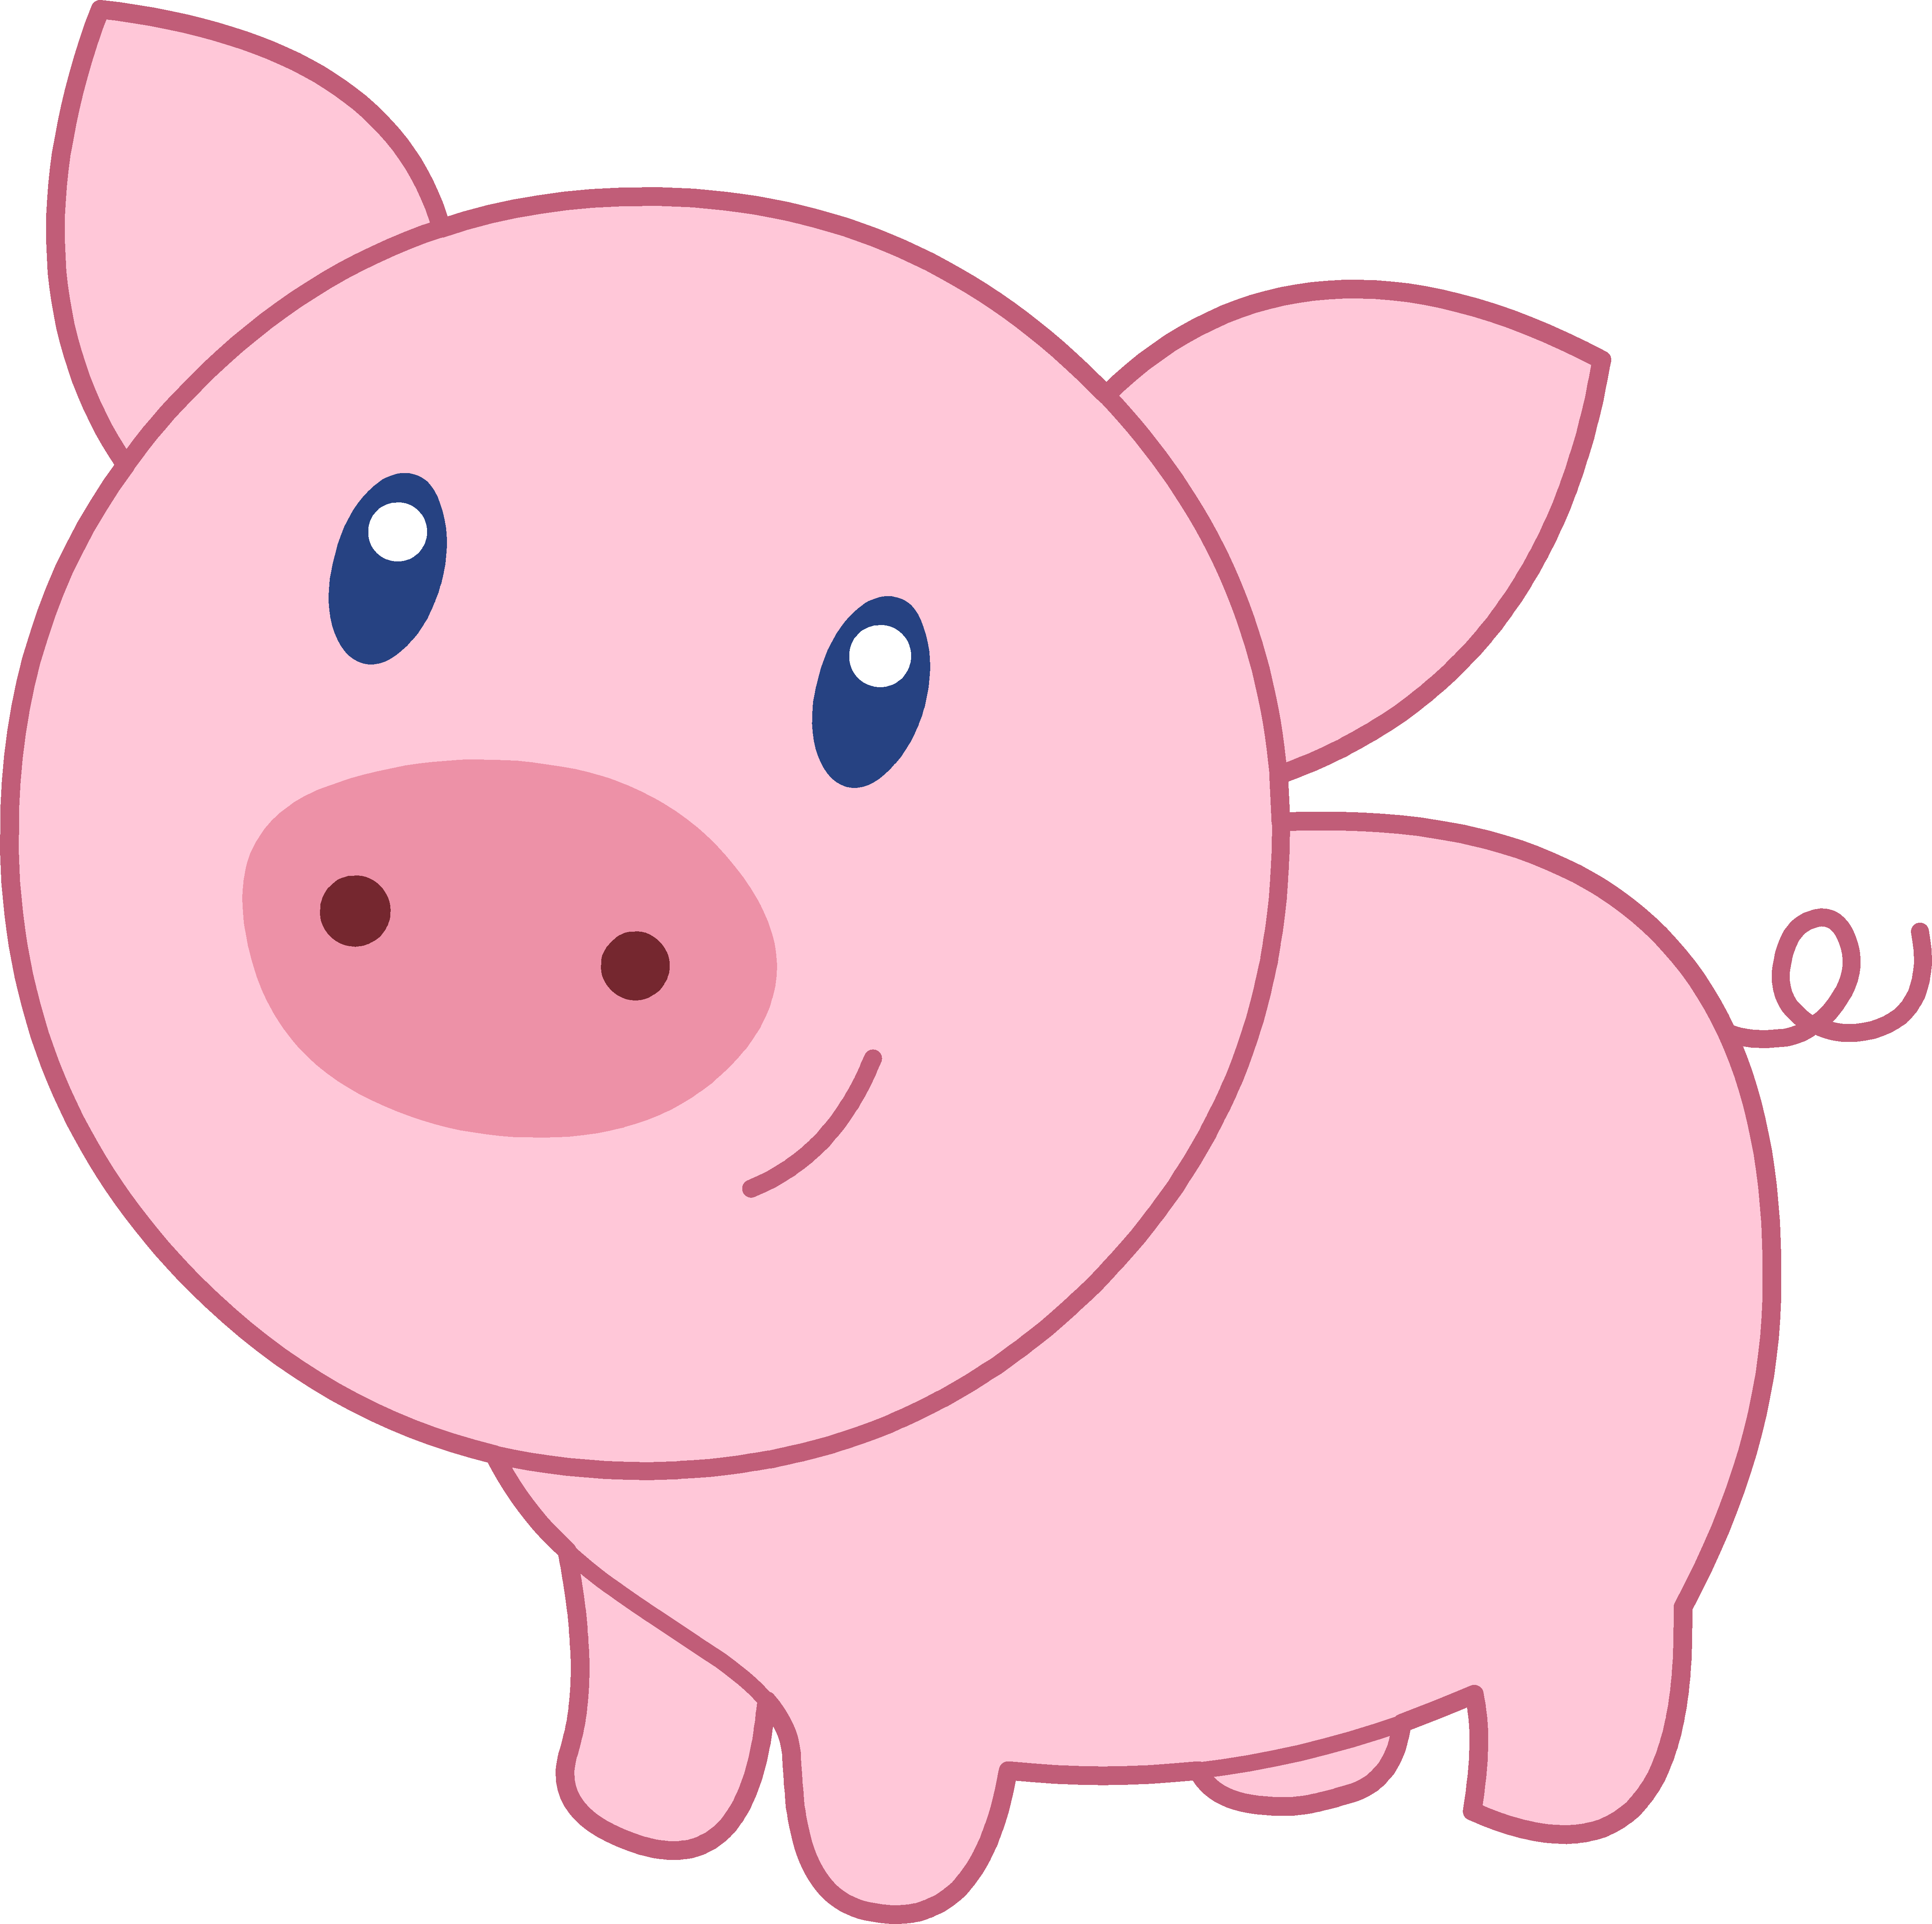 Pig Cute Cartoon - ClipArt Best